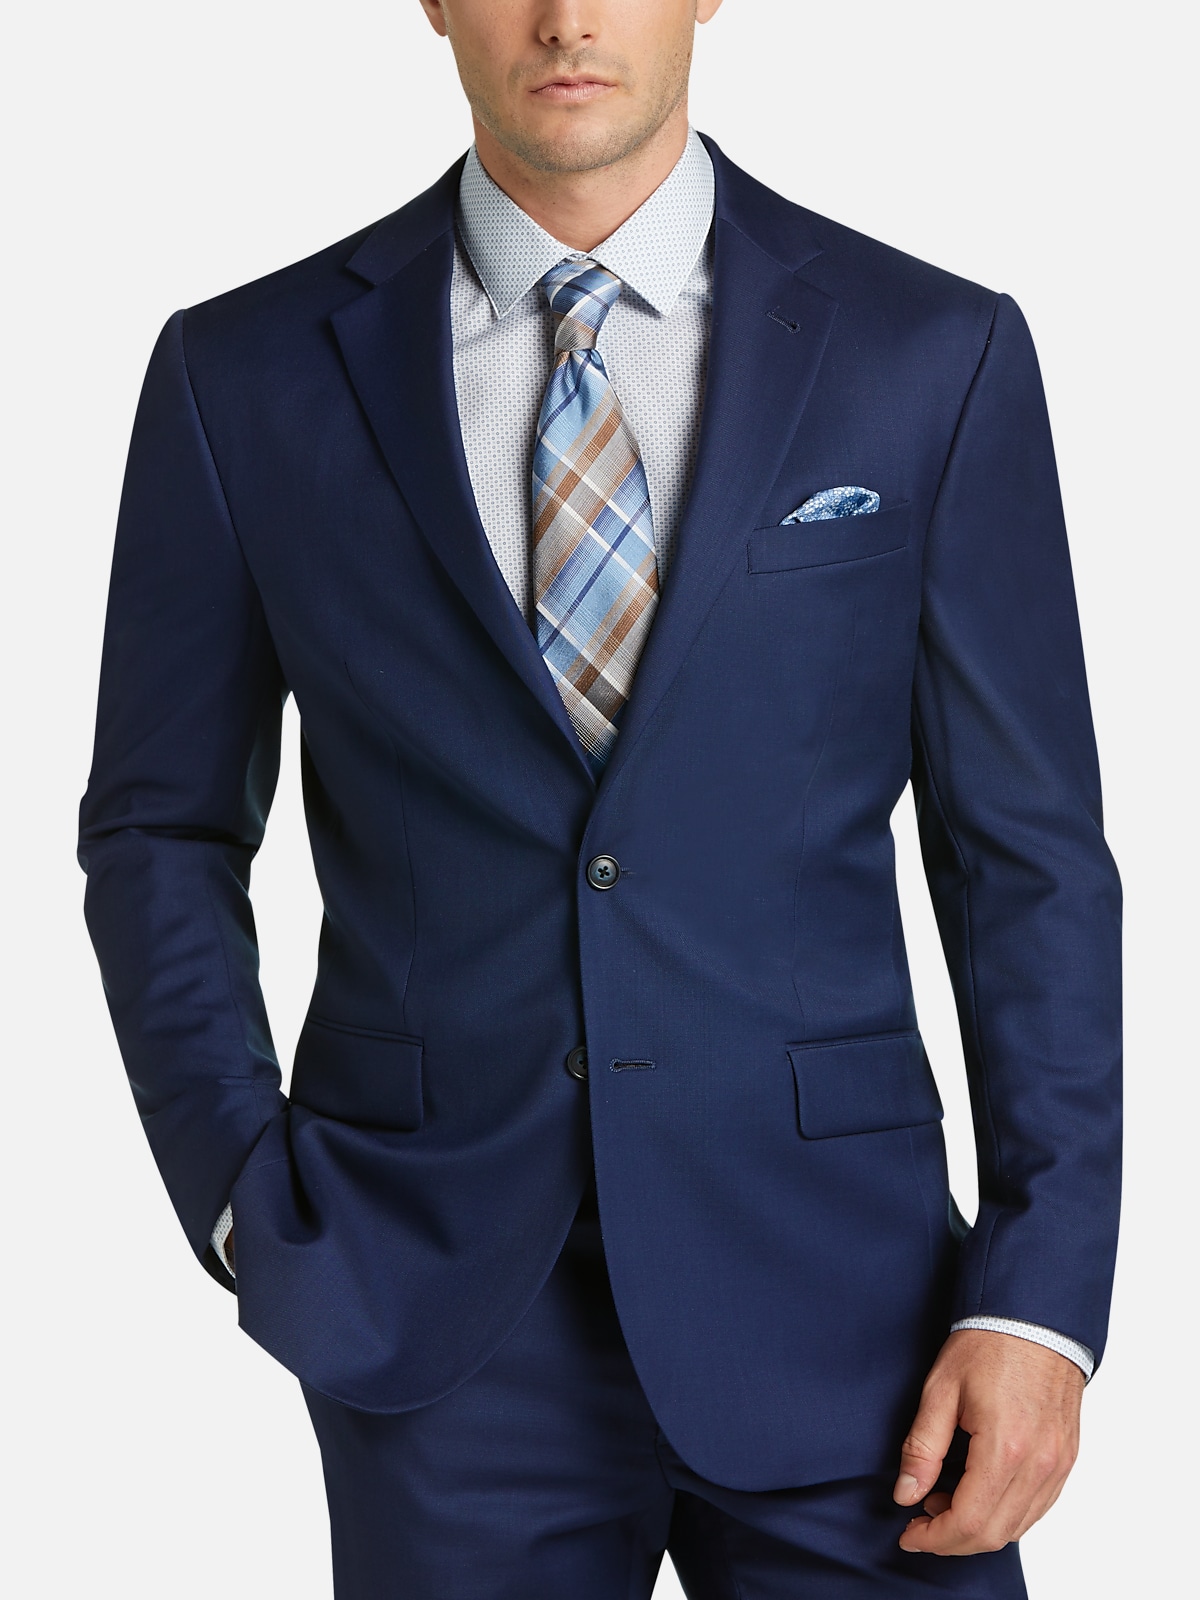 JOE Joseph Abboud Bright Slim Fit Suit | All Clothing| Men's Wearhouse